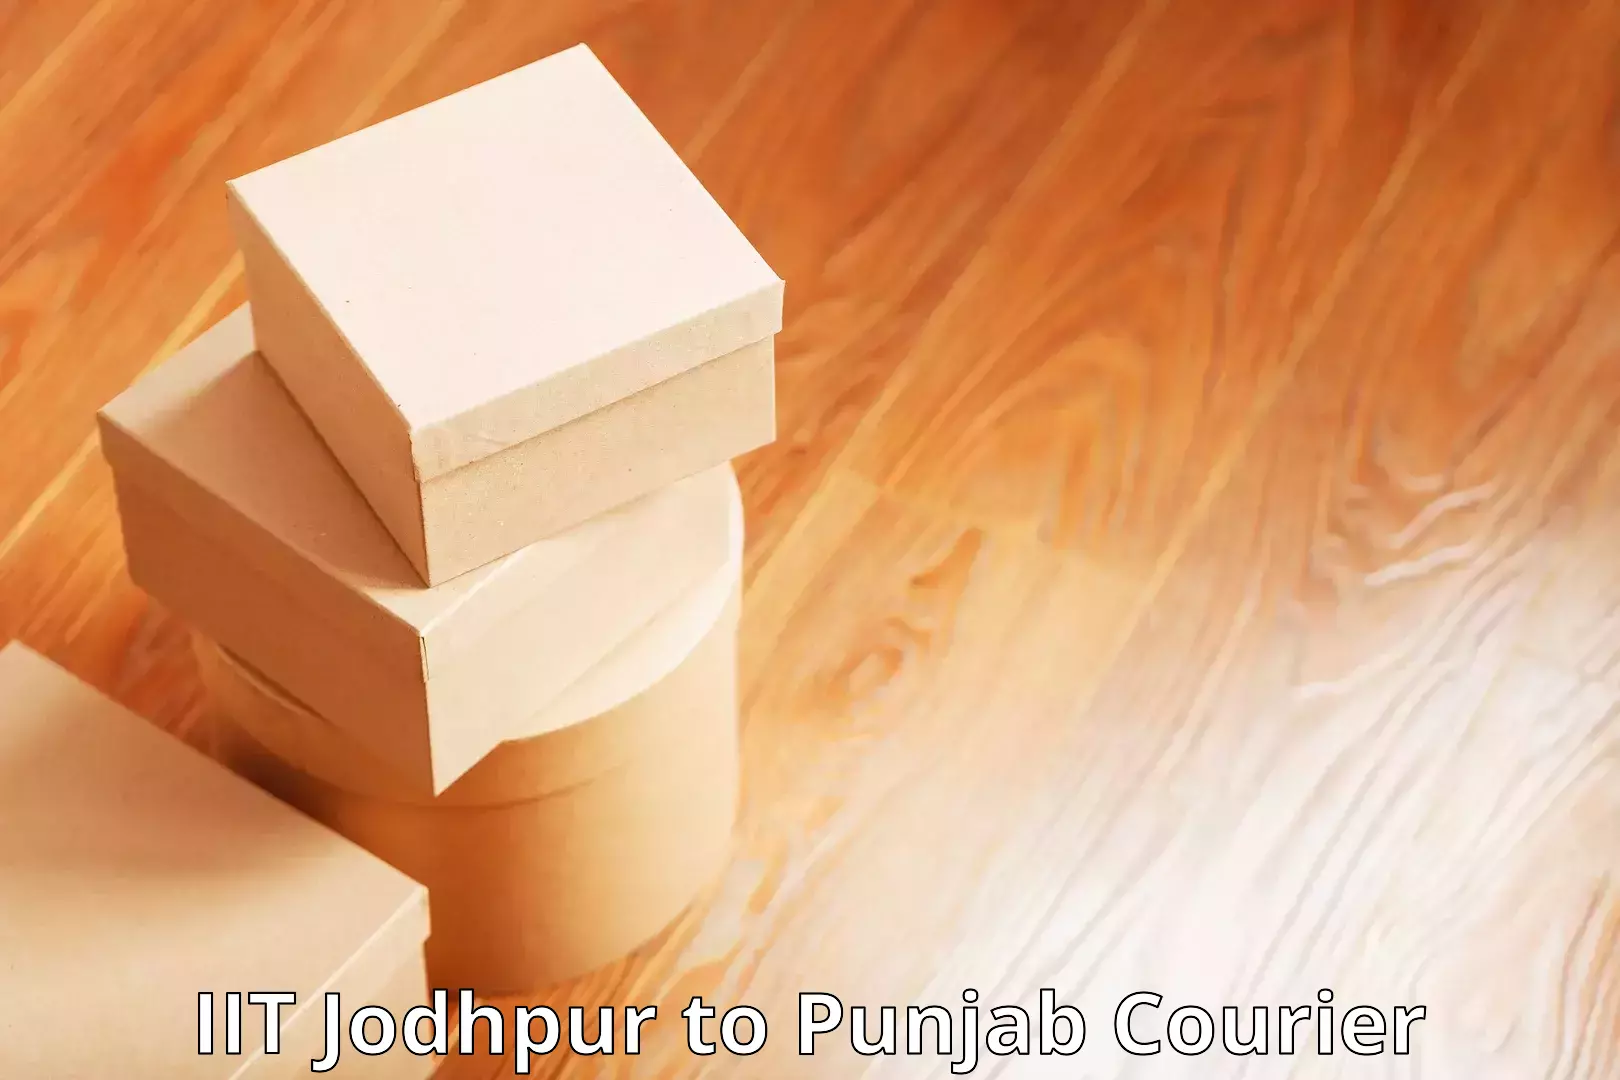 Customized delivery options IIT Jodhpur to Punjab